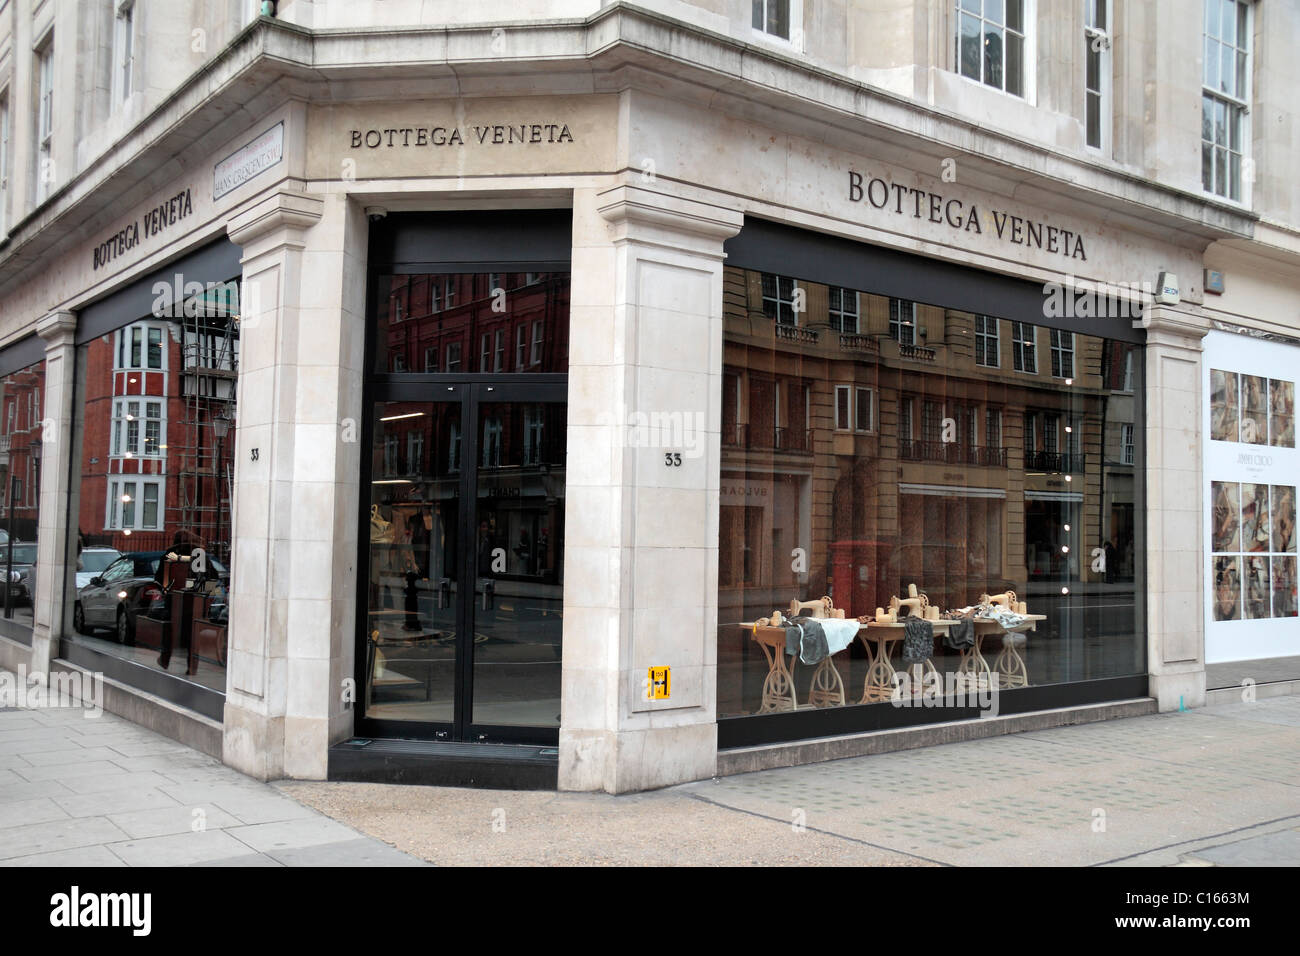 The Bottega Veneta handbag and leather goods shop on Sloane Street, London, SW1, England. Stock Photo